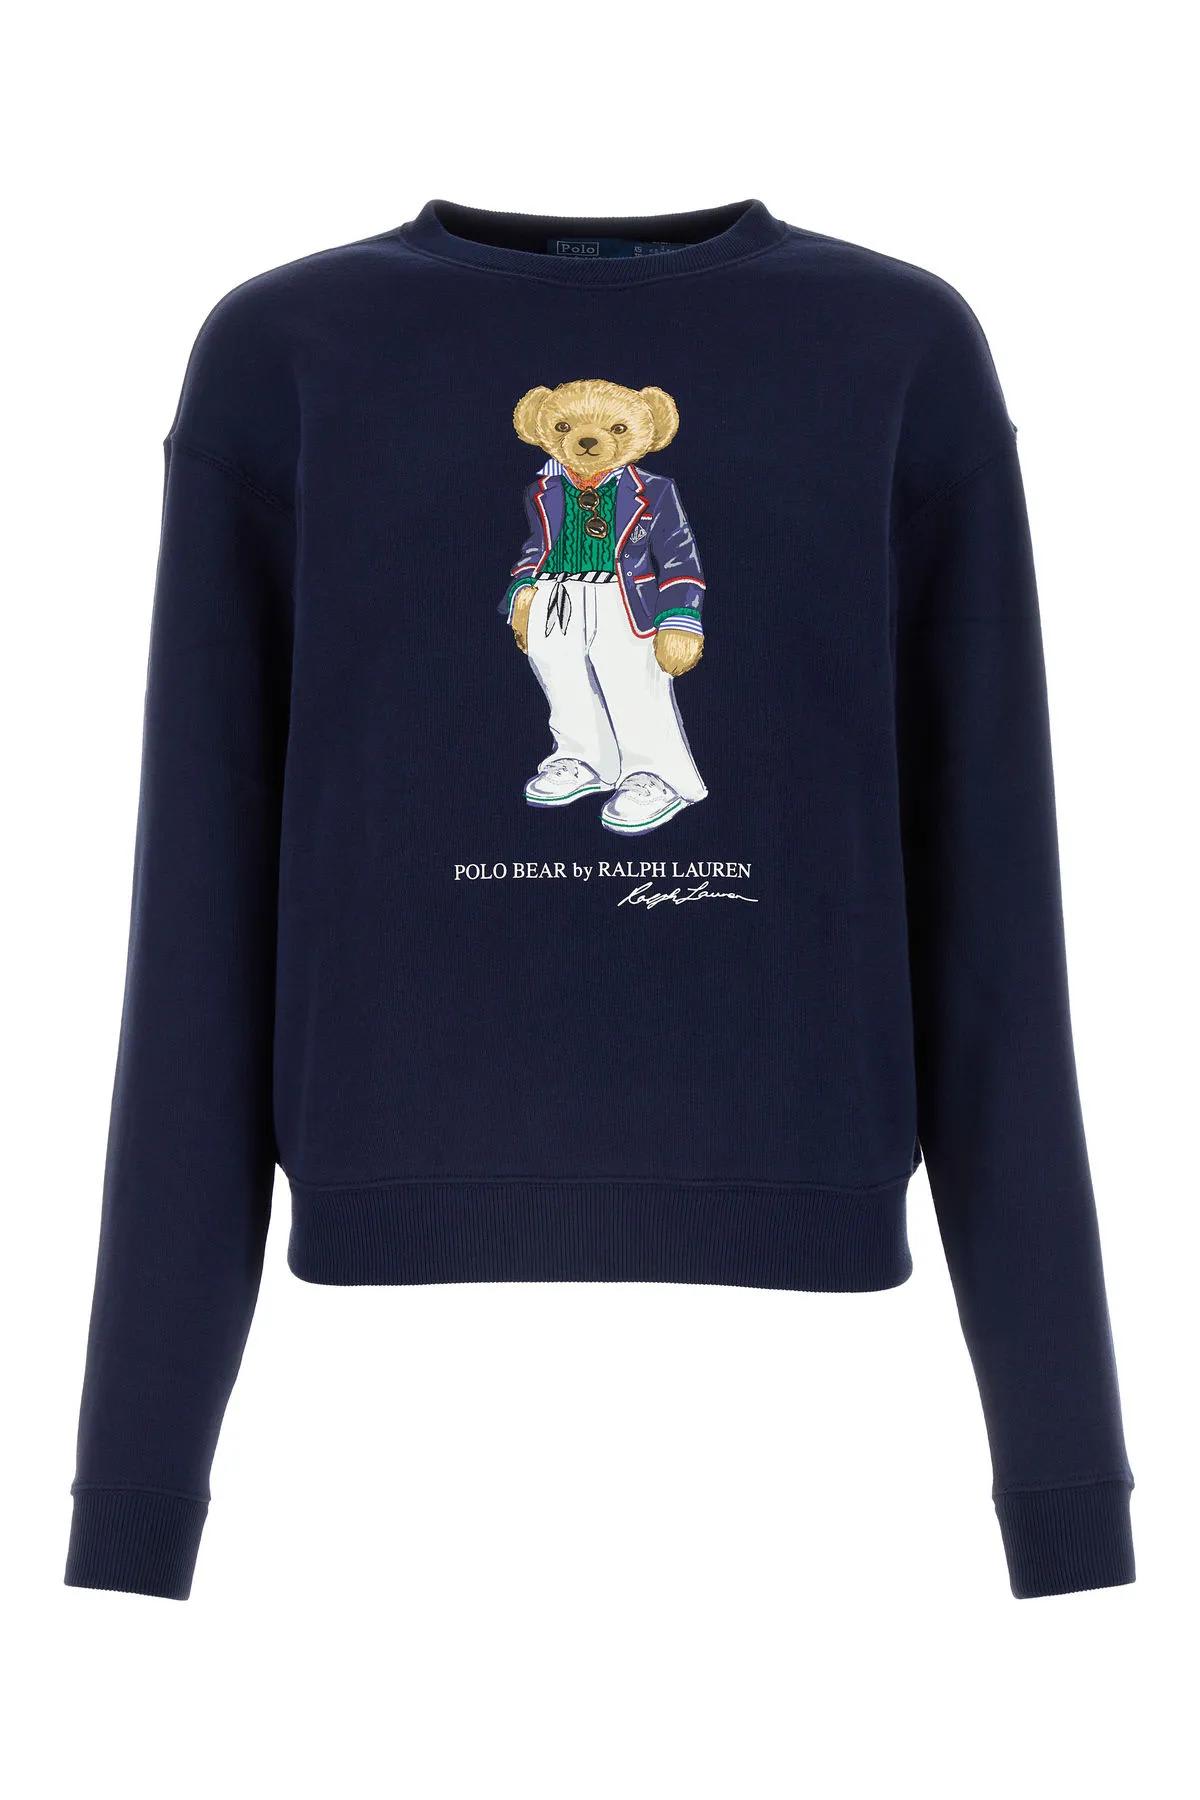 Shop Ralph Lauren Navy Blue Cotton Blend Sweatshirt